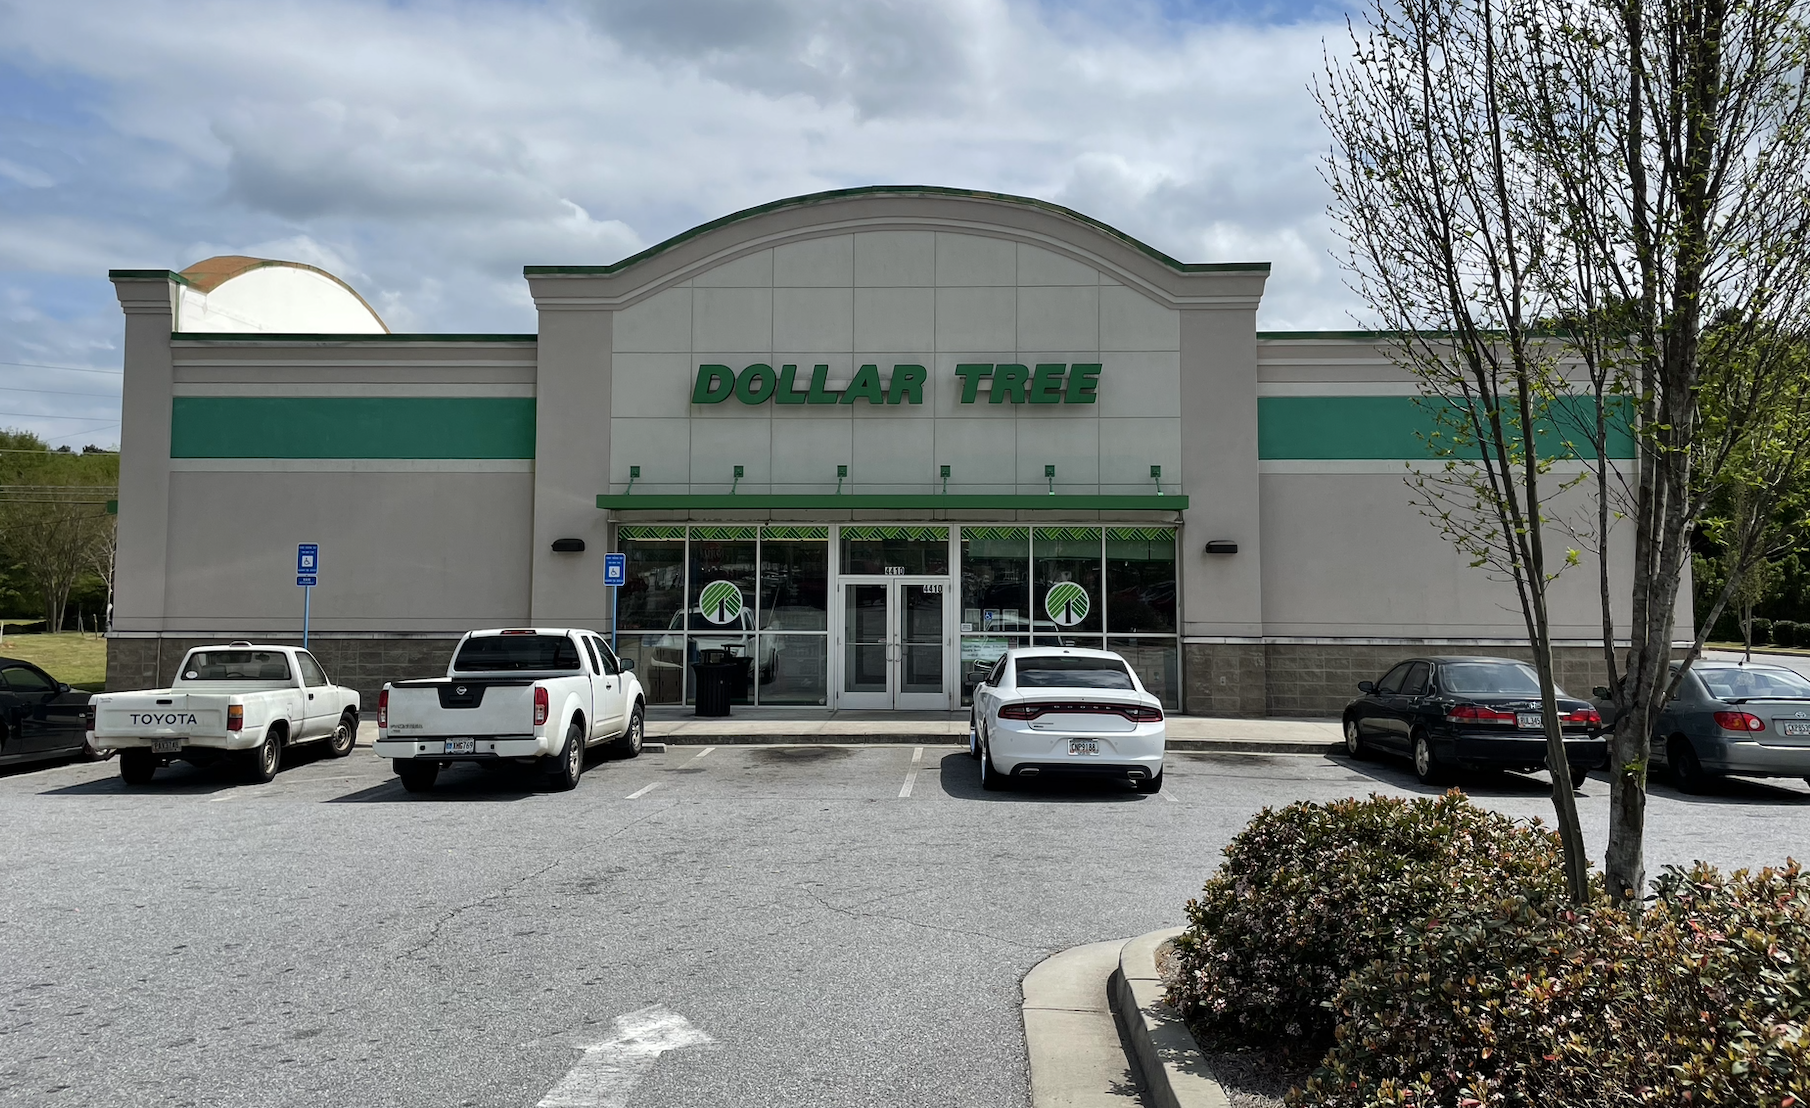 Dollar Tree: 4410 Lexington Road, Athens, GA 30605 (CLOSED, Stratus Property Group)